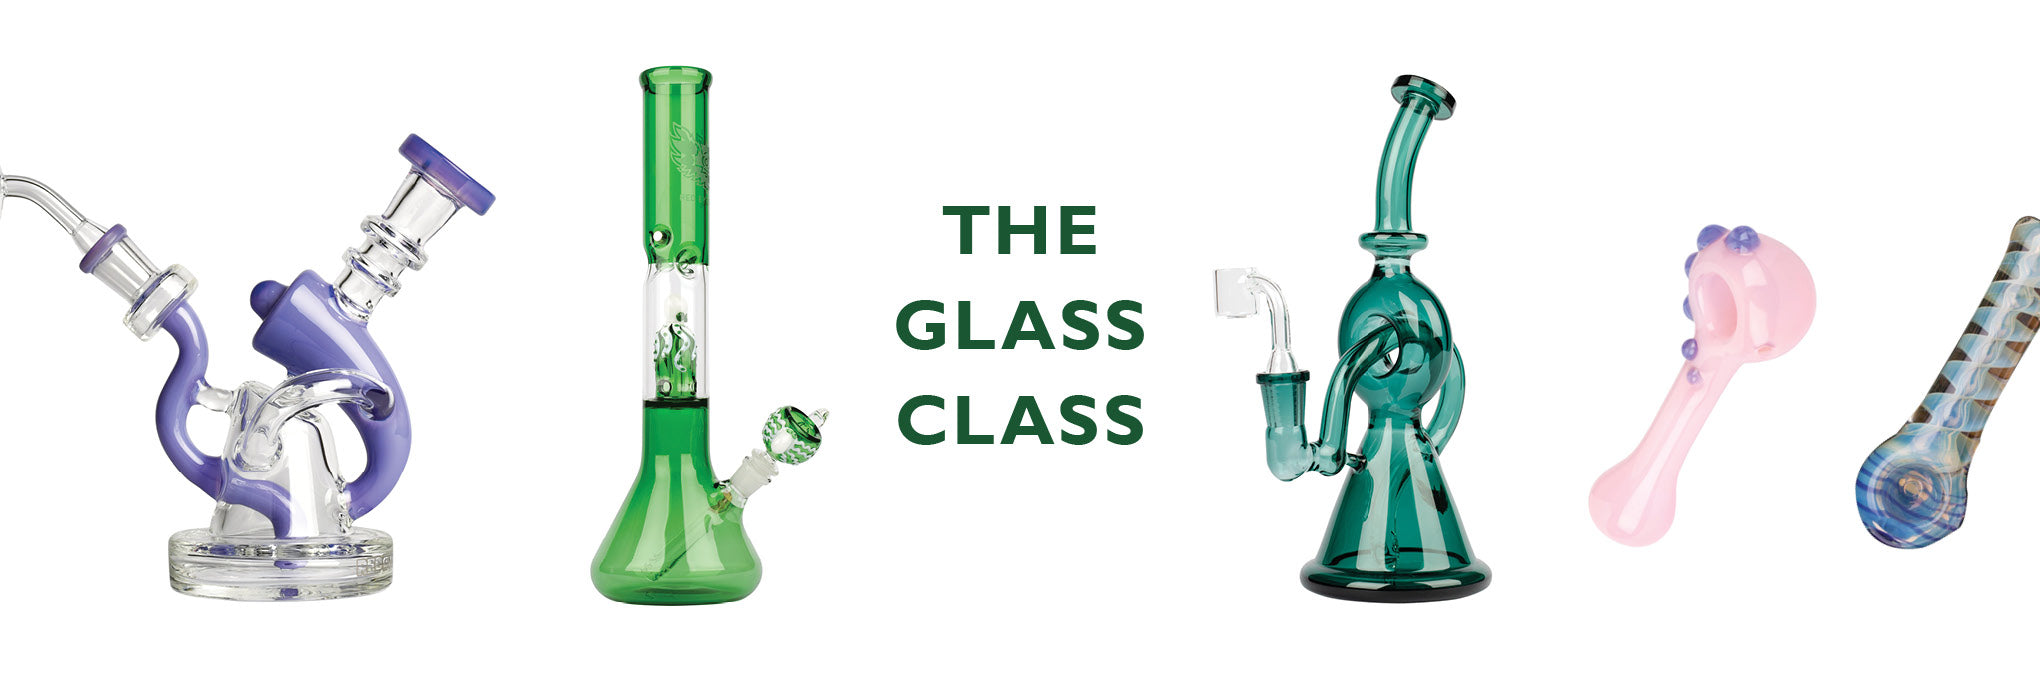 Glass accessories 101